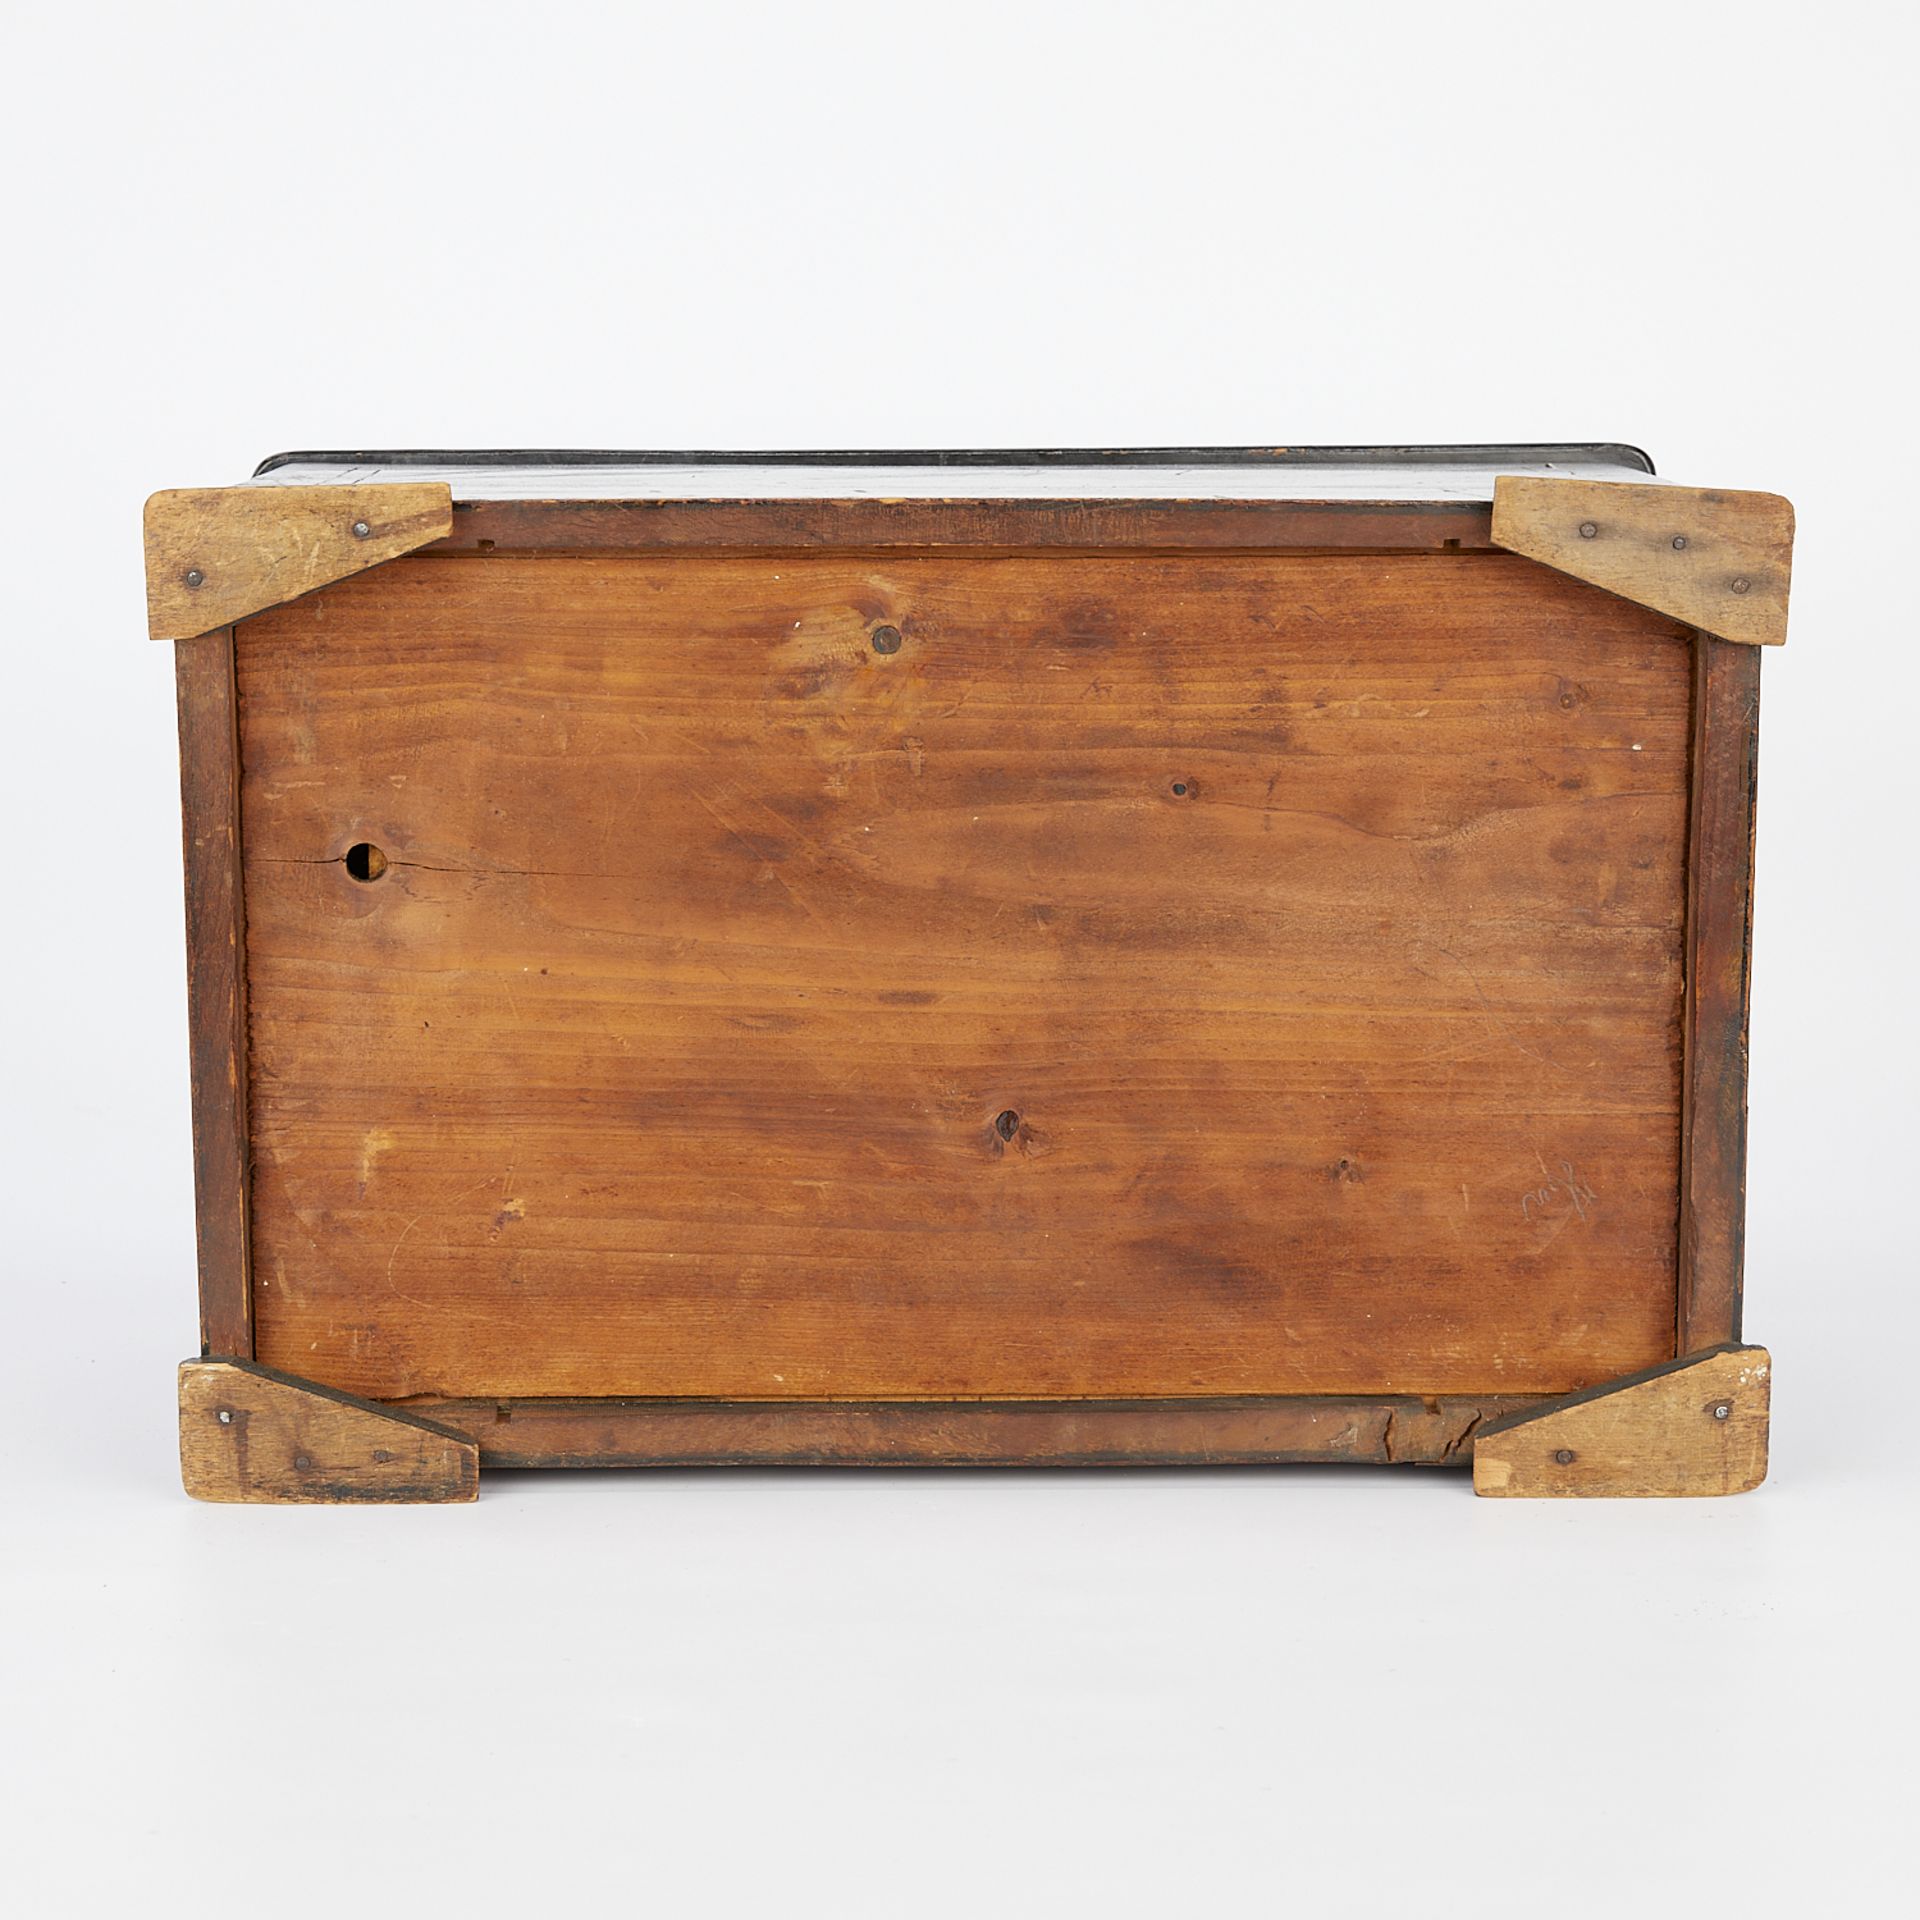 19th c. Antique Swiss Music Box - Image 14 of 14